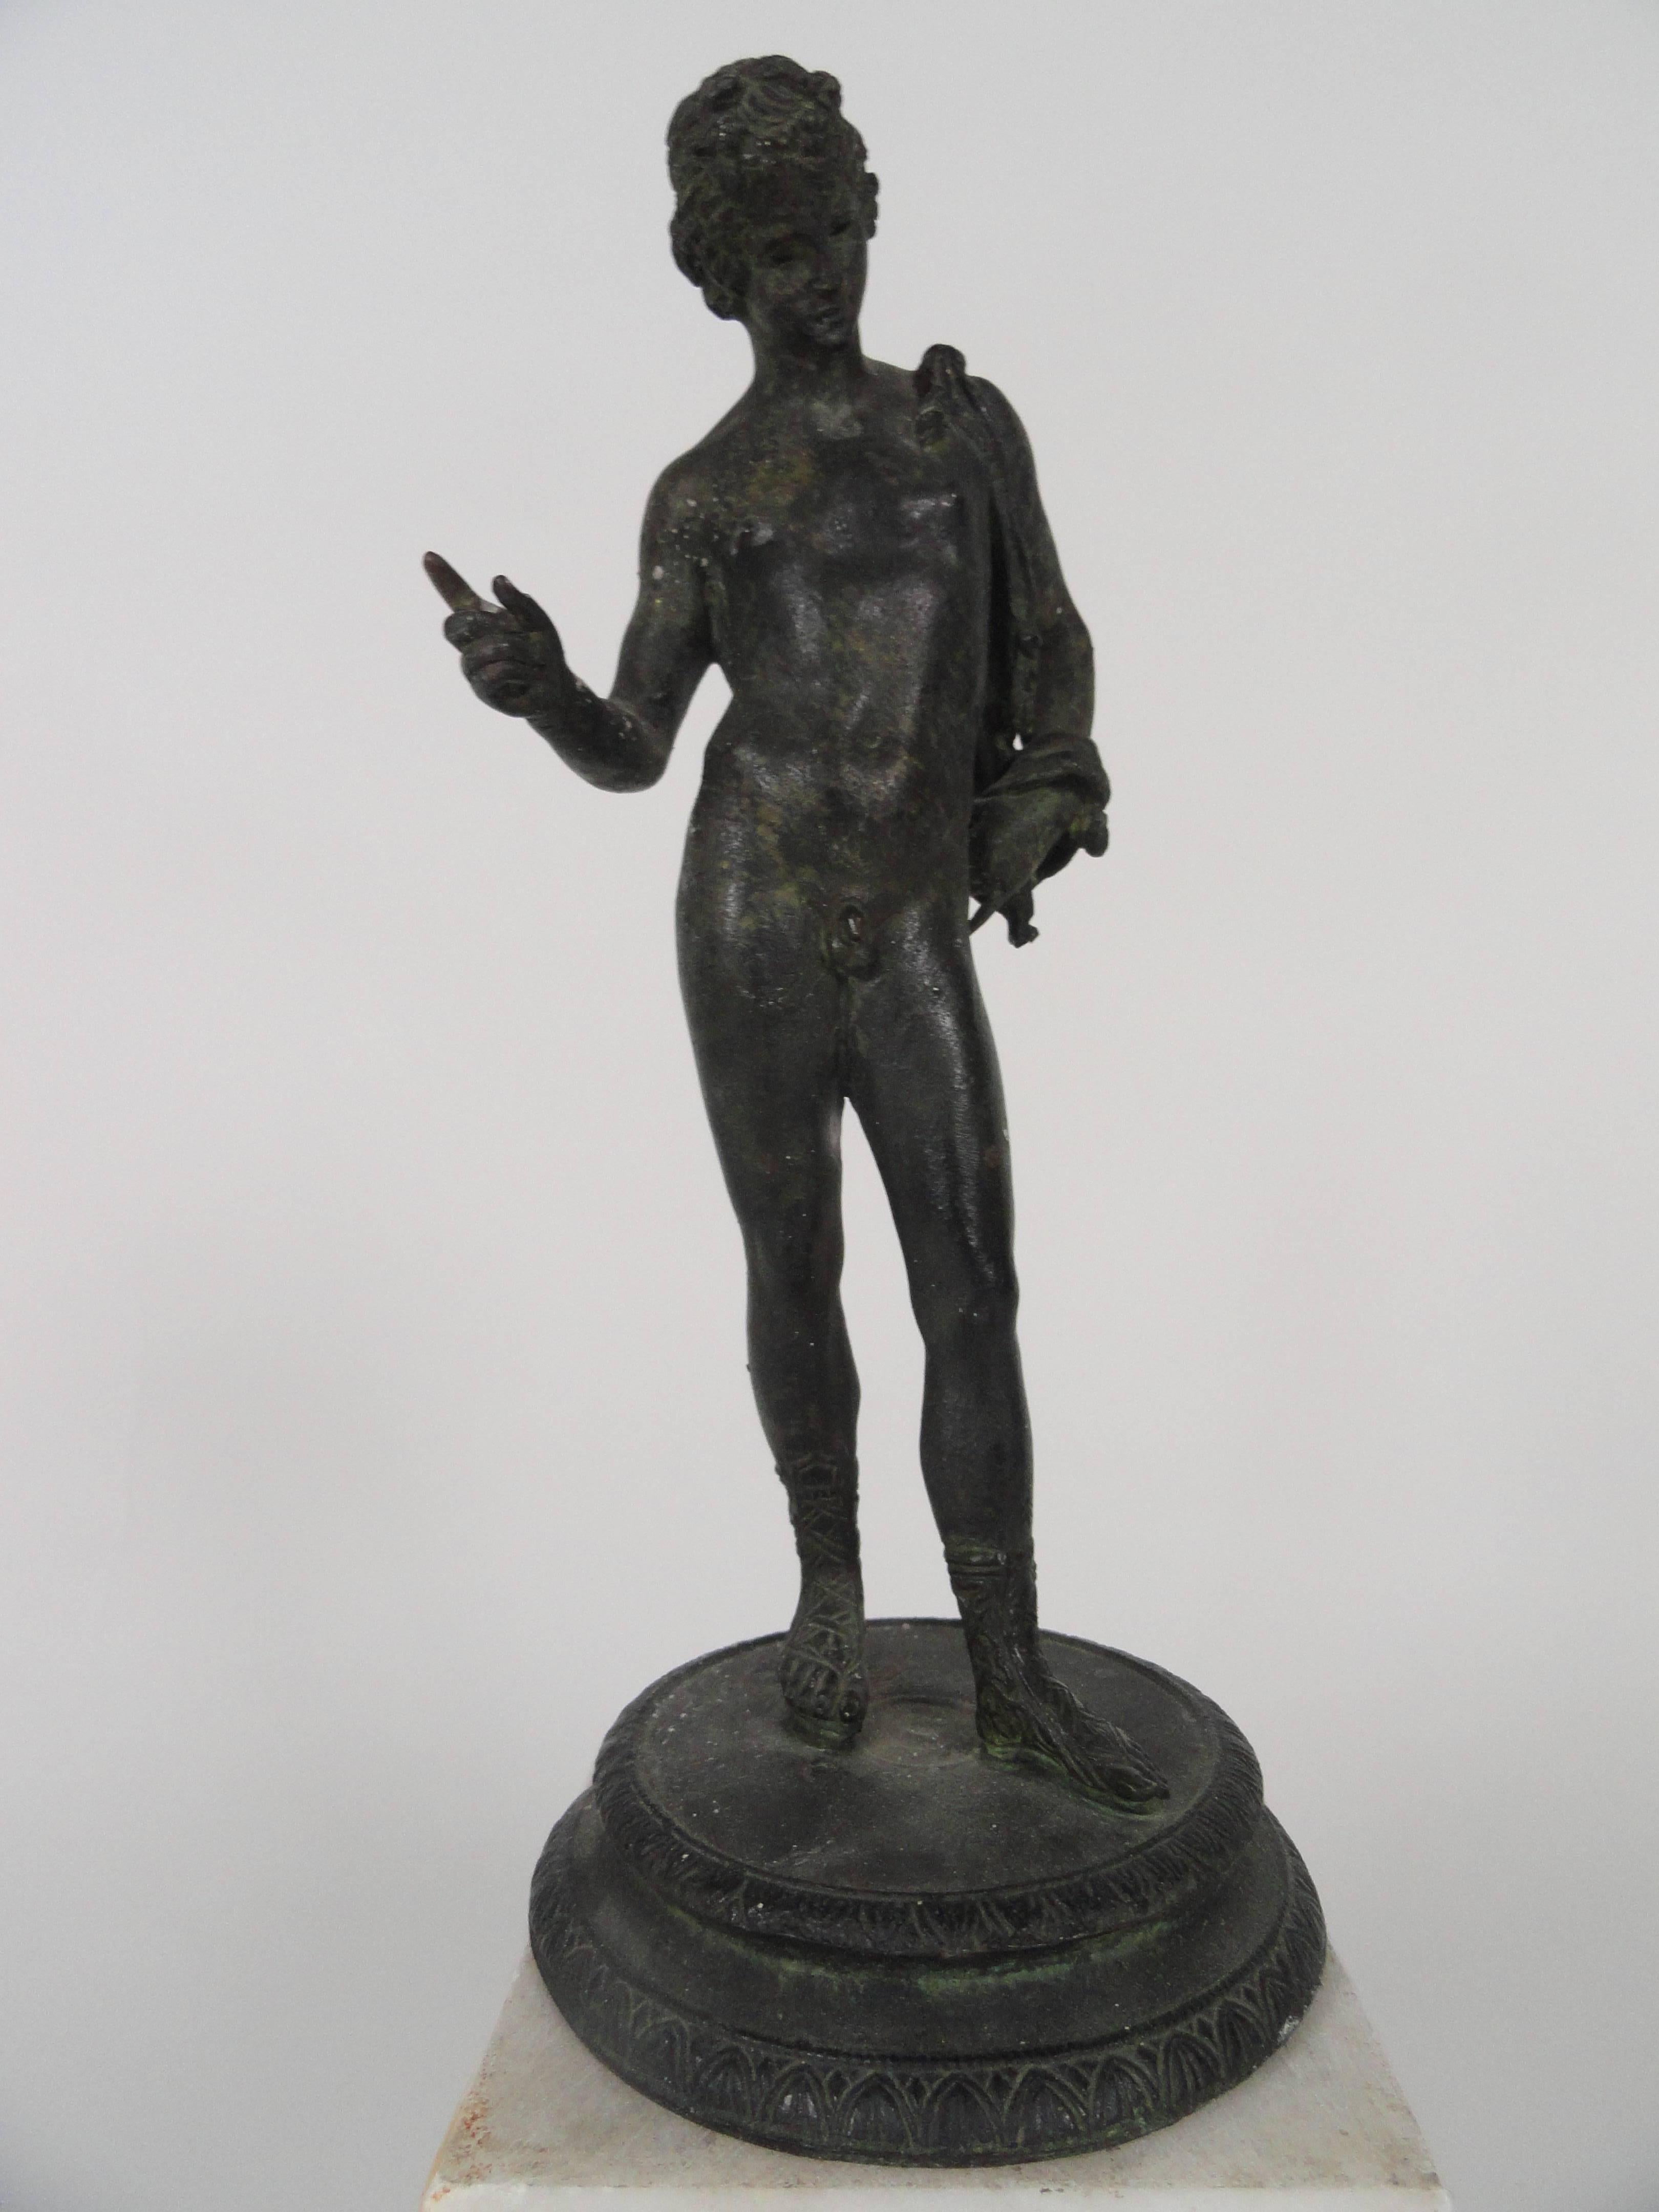 Late 19th century bronze Grand Tour warrior sculpture. Neoclassical bronze sculpture, showing Roman warrior shown on onyx pedestal.
9